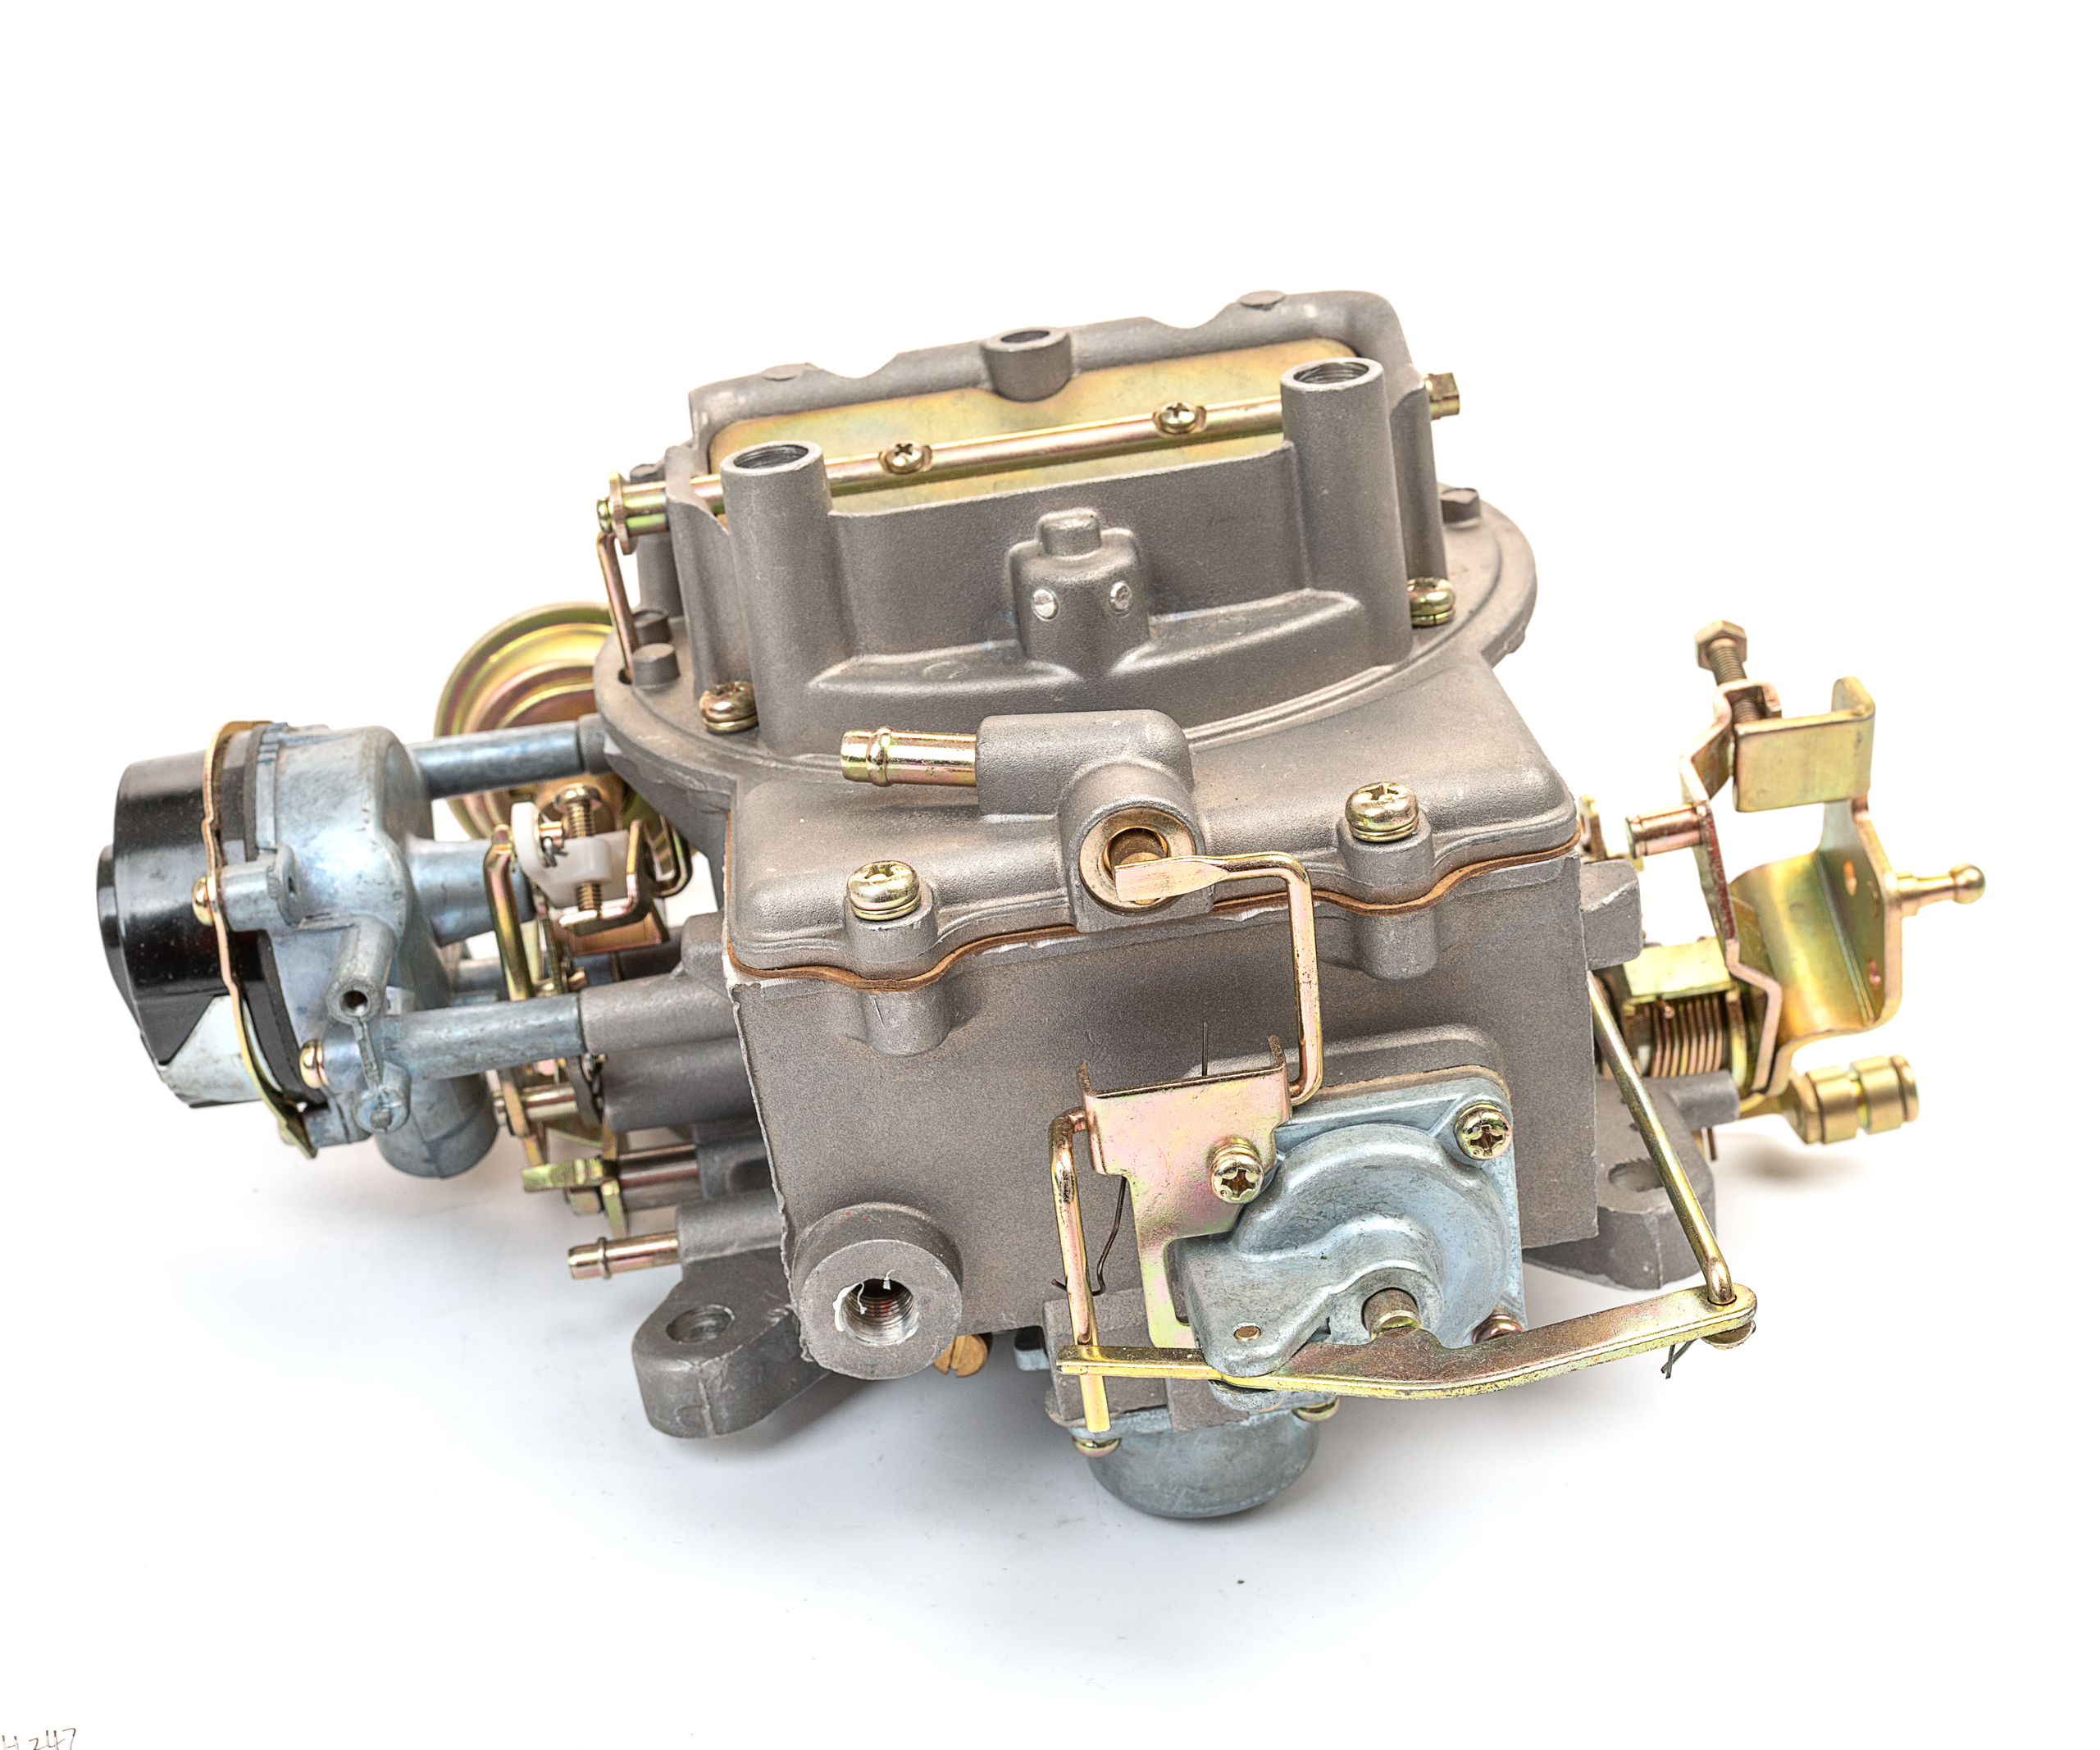 Carburetor supplier | Carburetor mixing ratio is lean